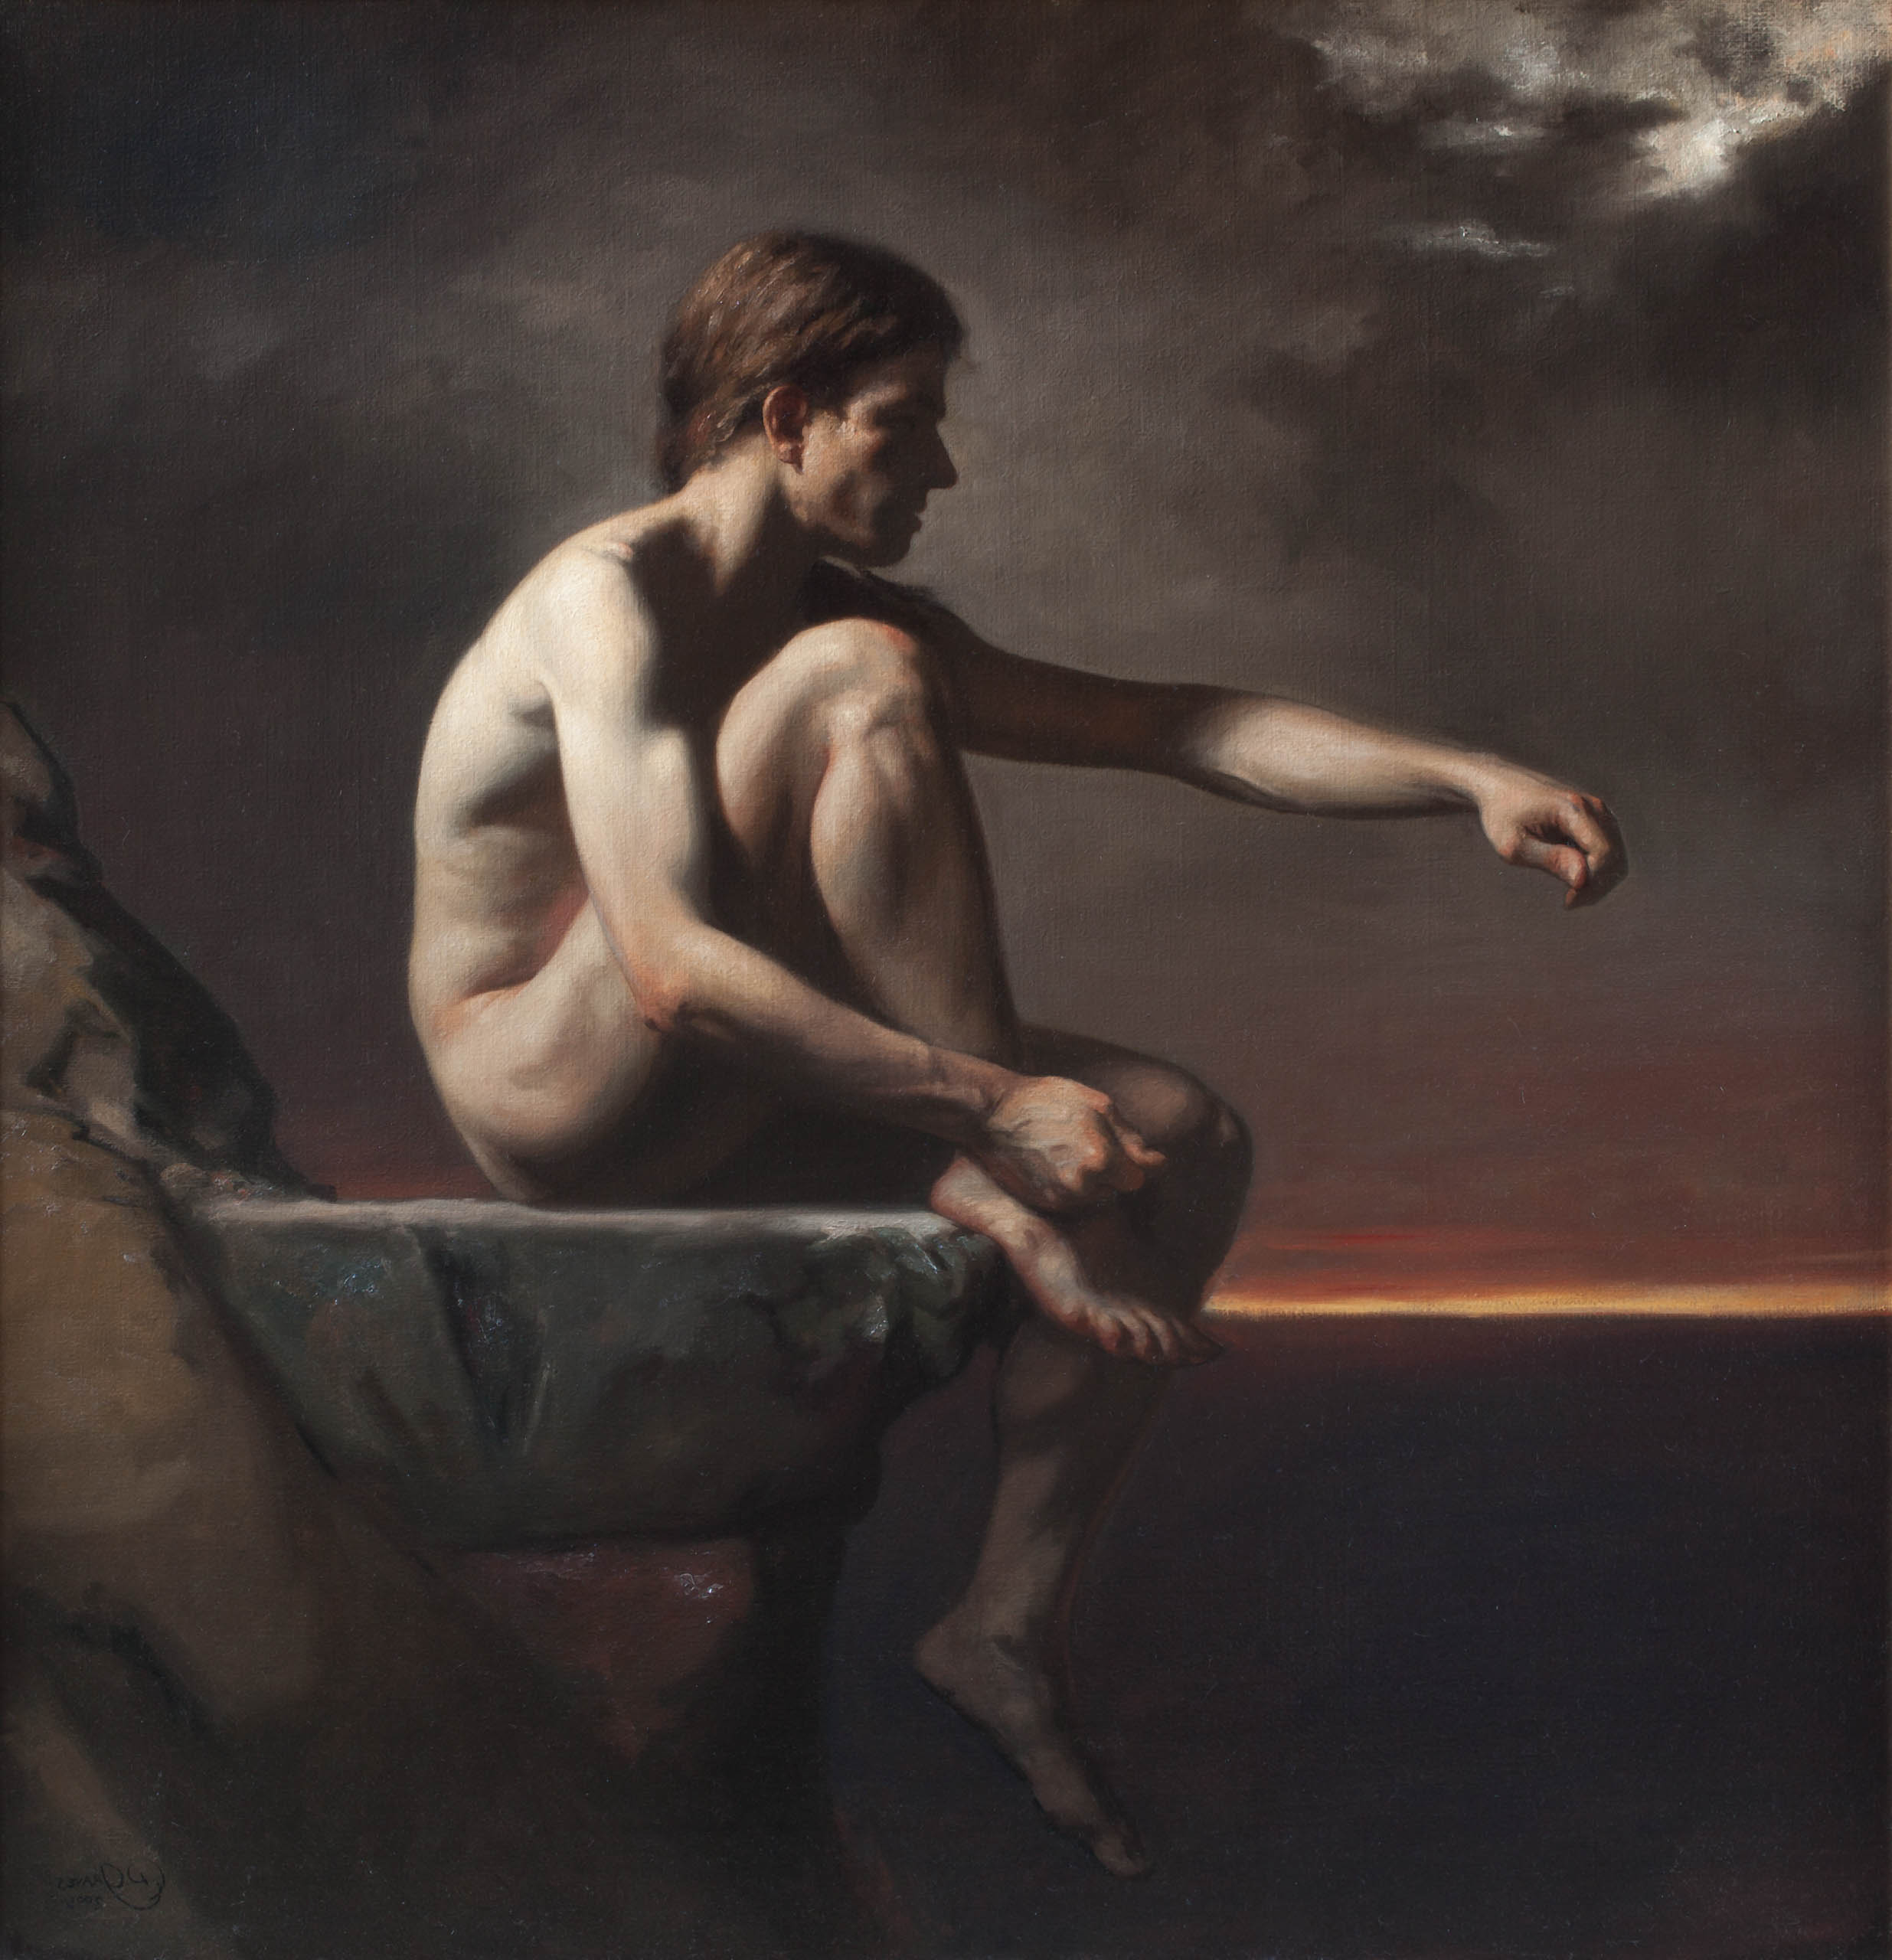 Daniel Graves, The Gift (male figure), Oil on linen, 51 x 53 in. 2006